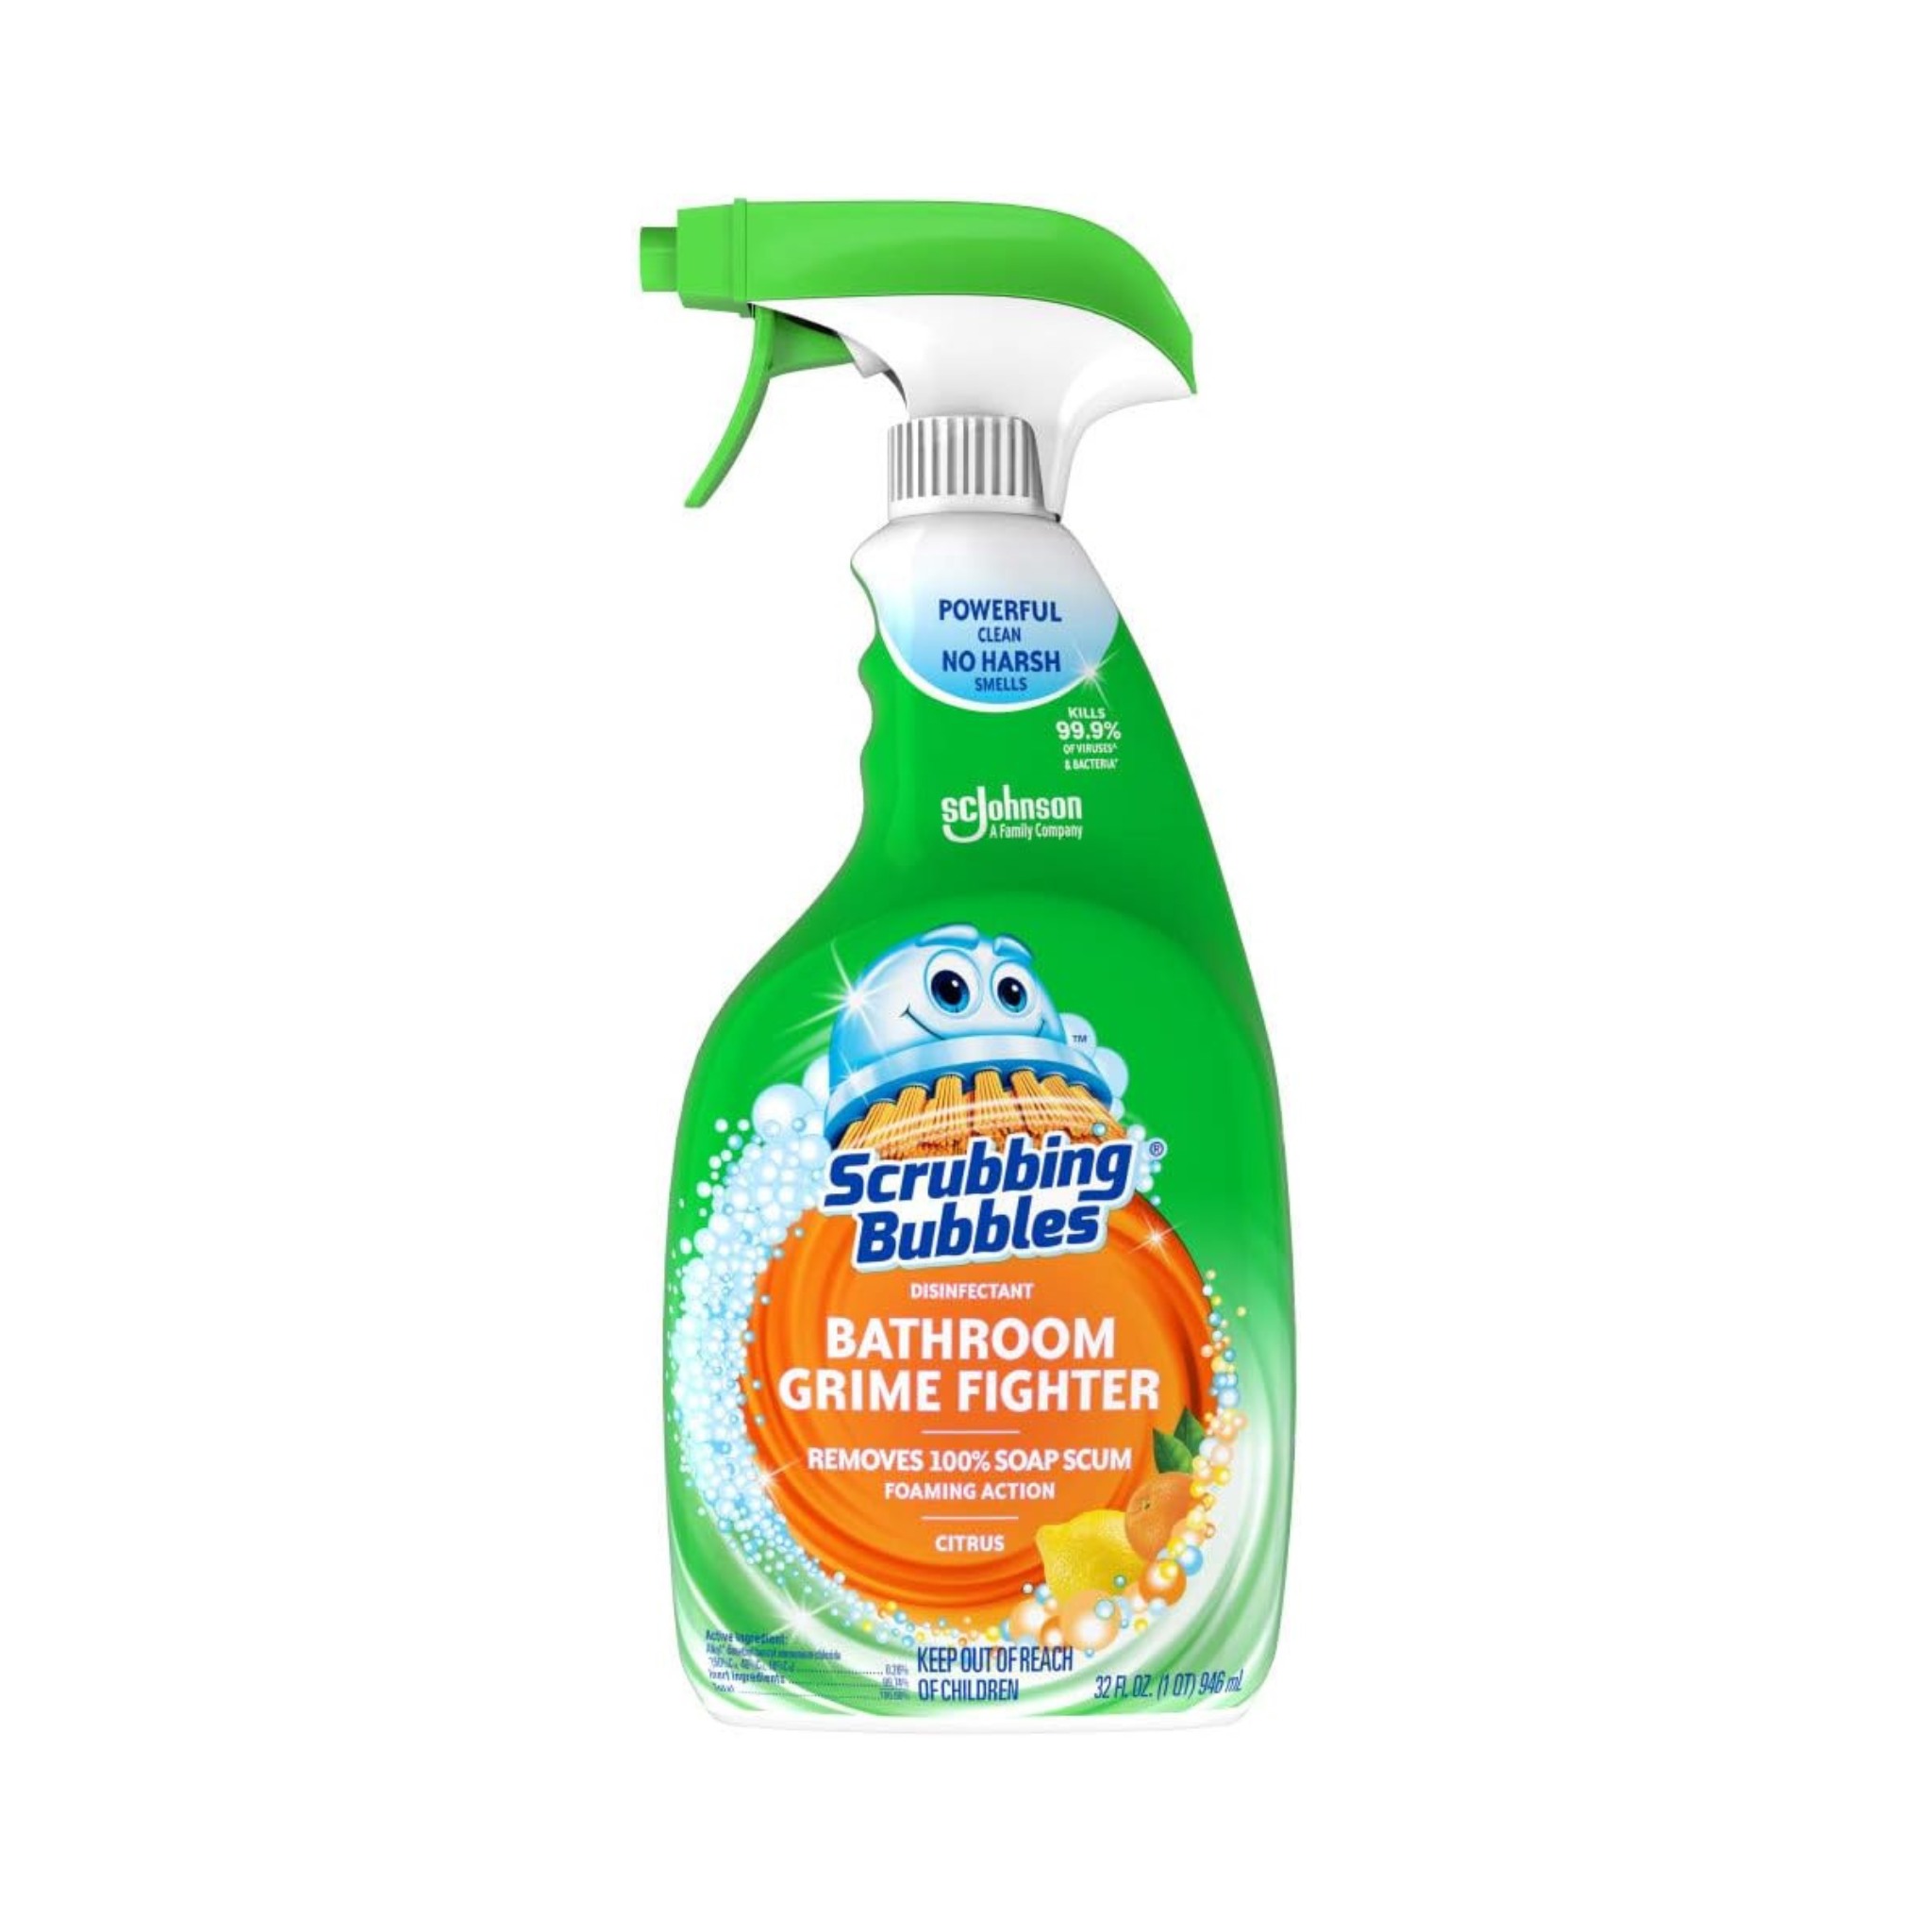 2 Bottles Of 32oz Scrubbing Bubbles Citrus Disinfectant Bathroom Grime Fighter Spray